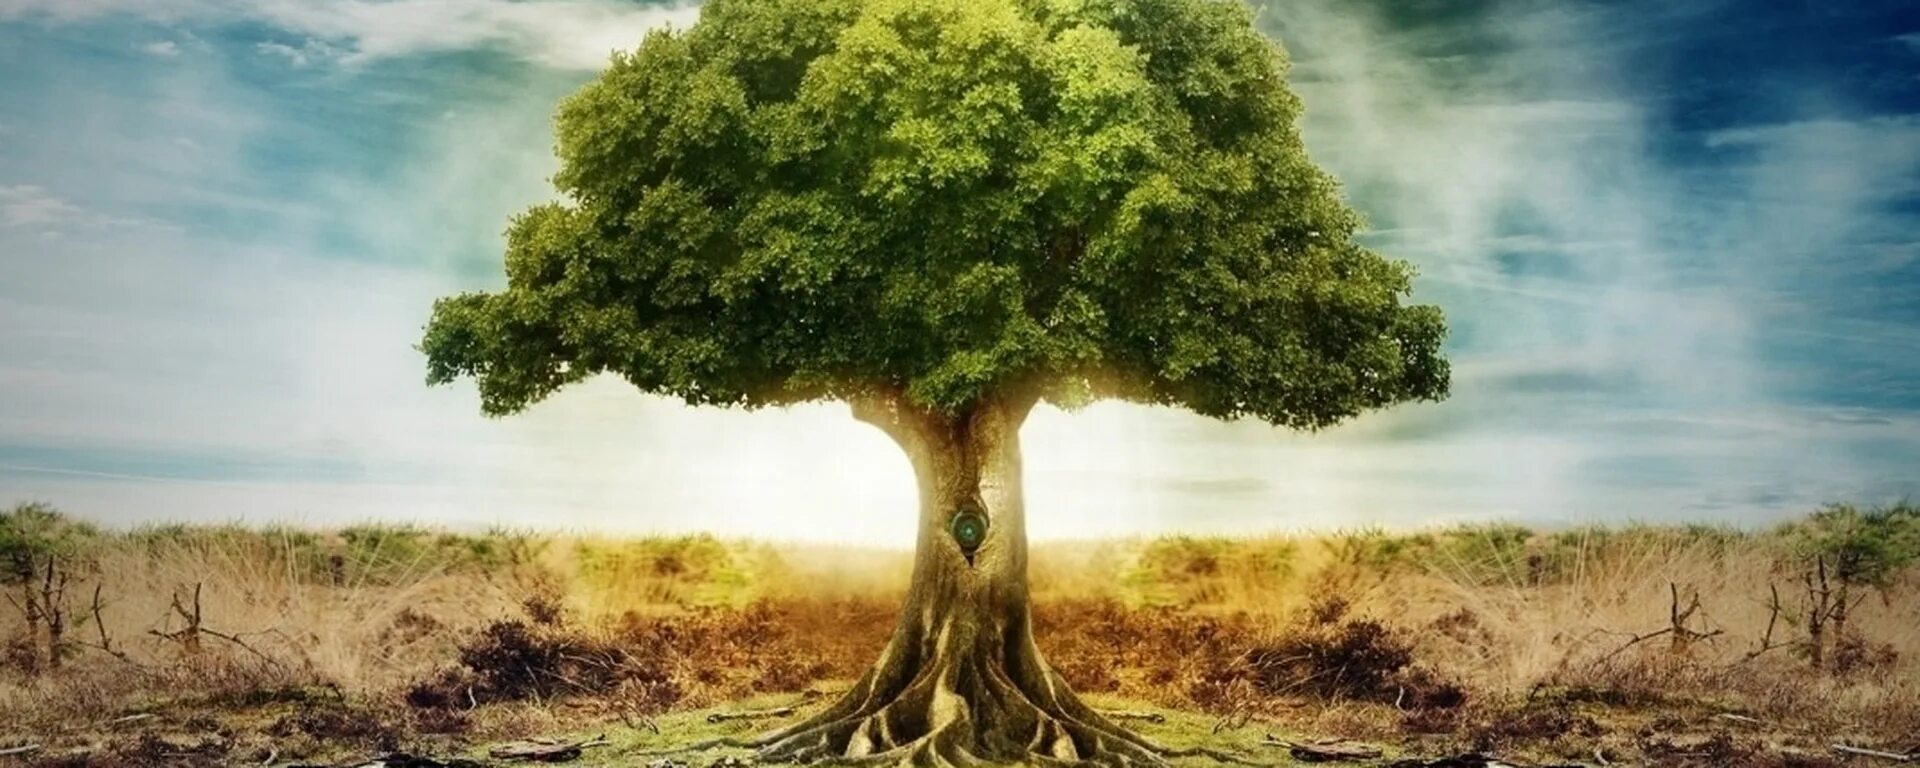 Дерево жизни дуб. Дерево жизни. Сказочное дерево. Красивое дерево жизни. Дерево Древо.